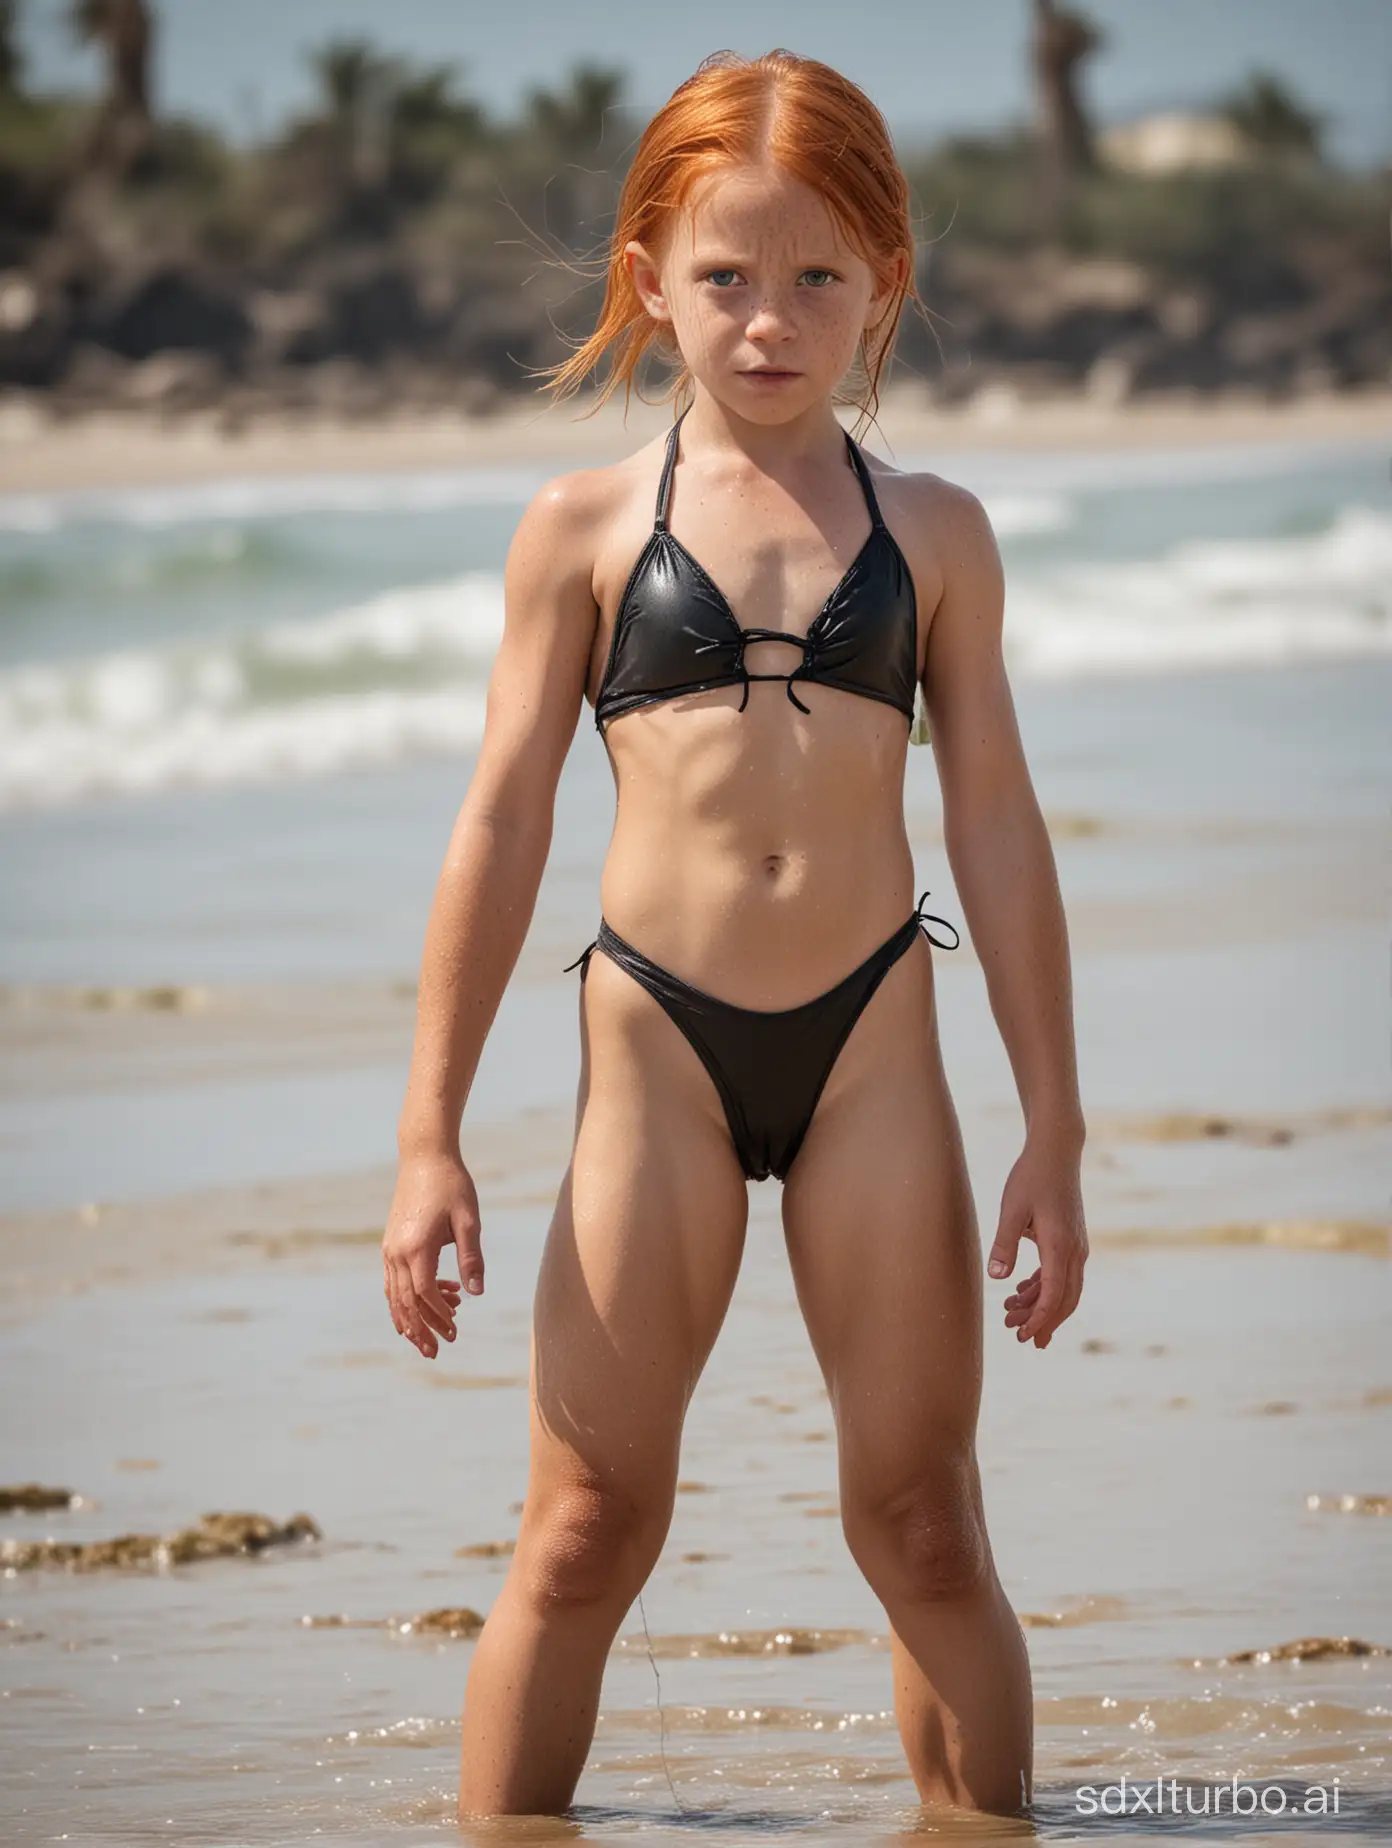 Muscular-7YearOld-GingerHaired-Girl-in-Zombie-World-Beach-Scene